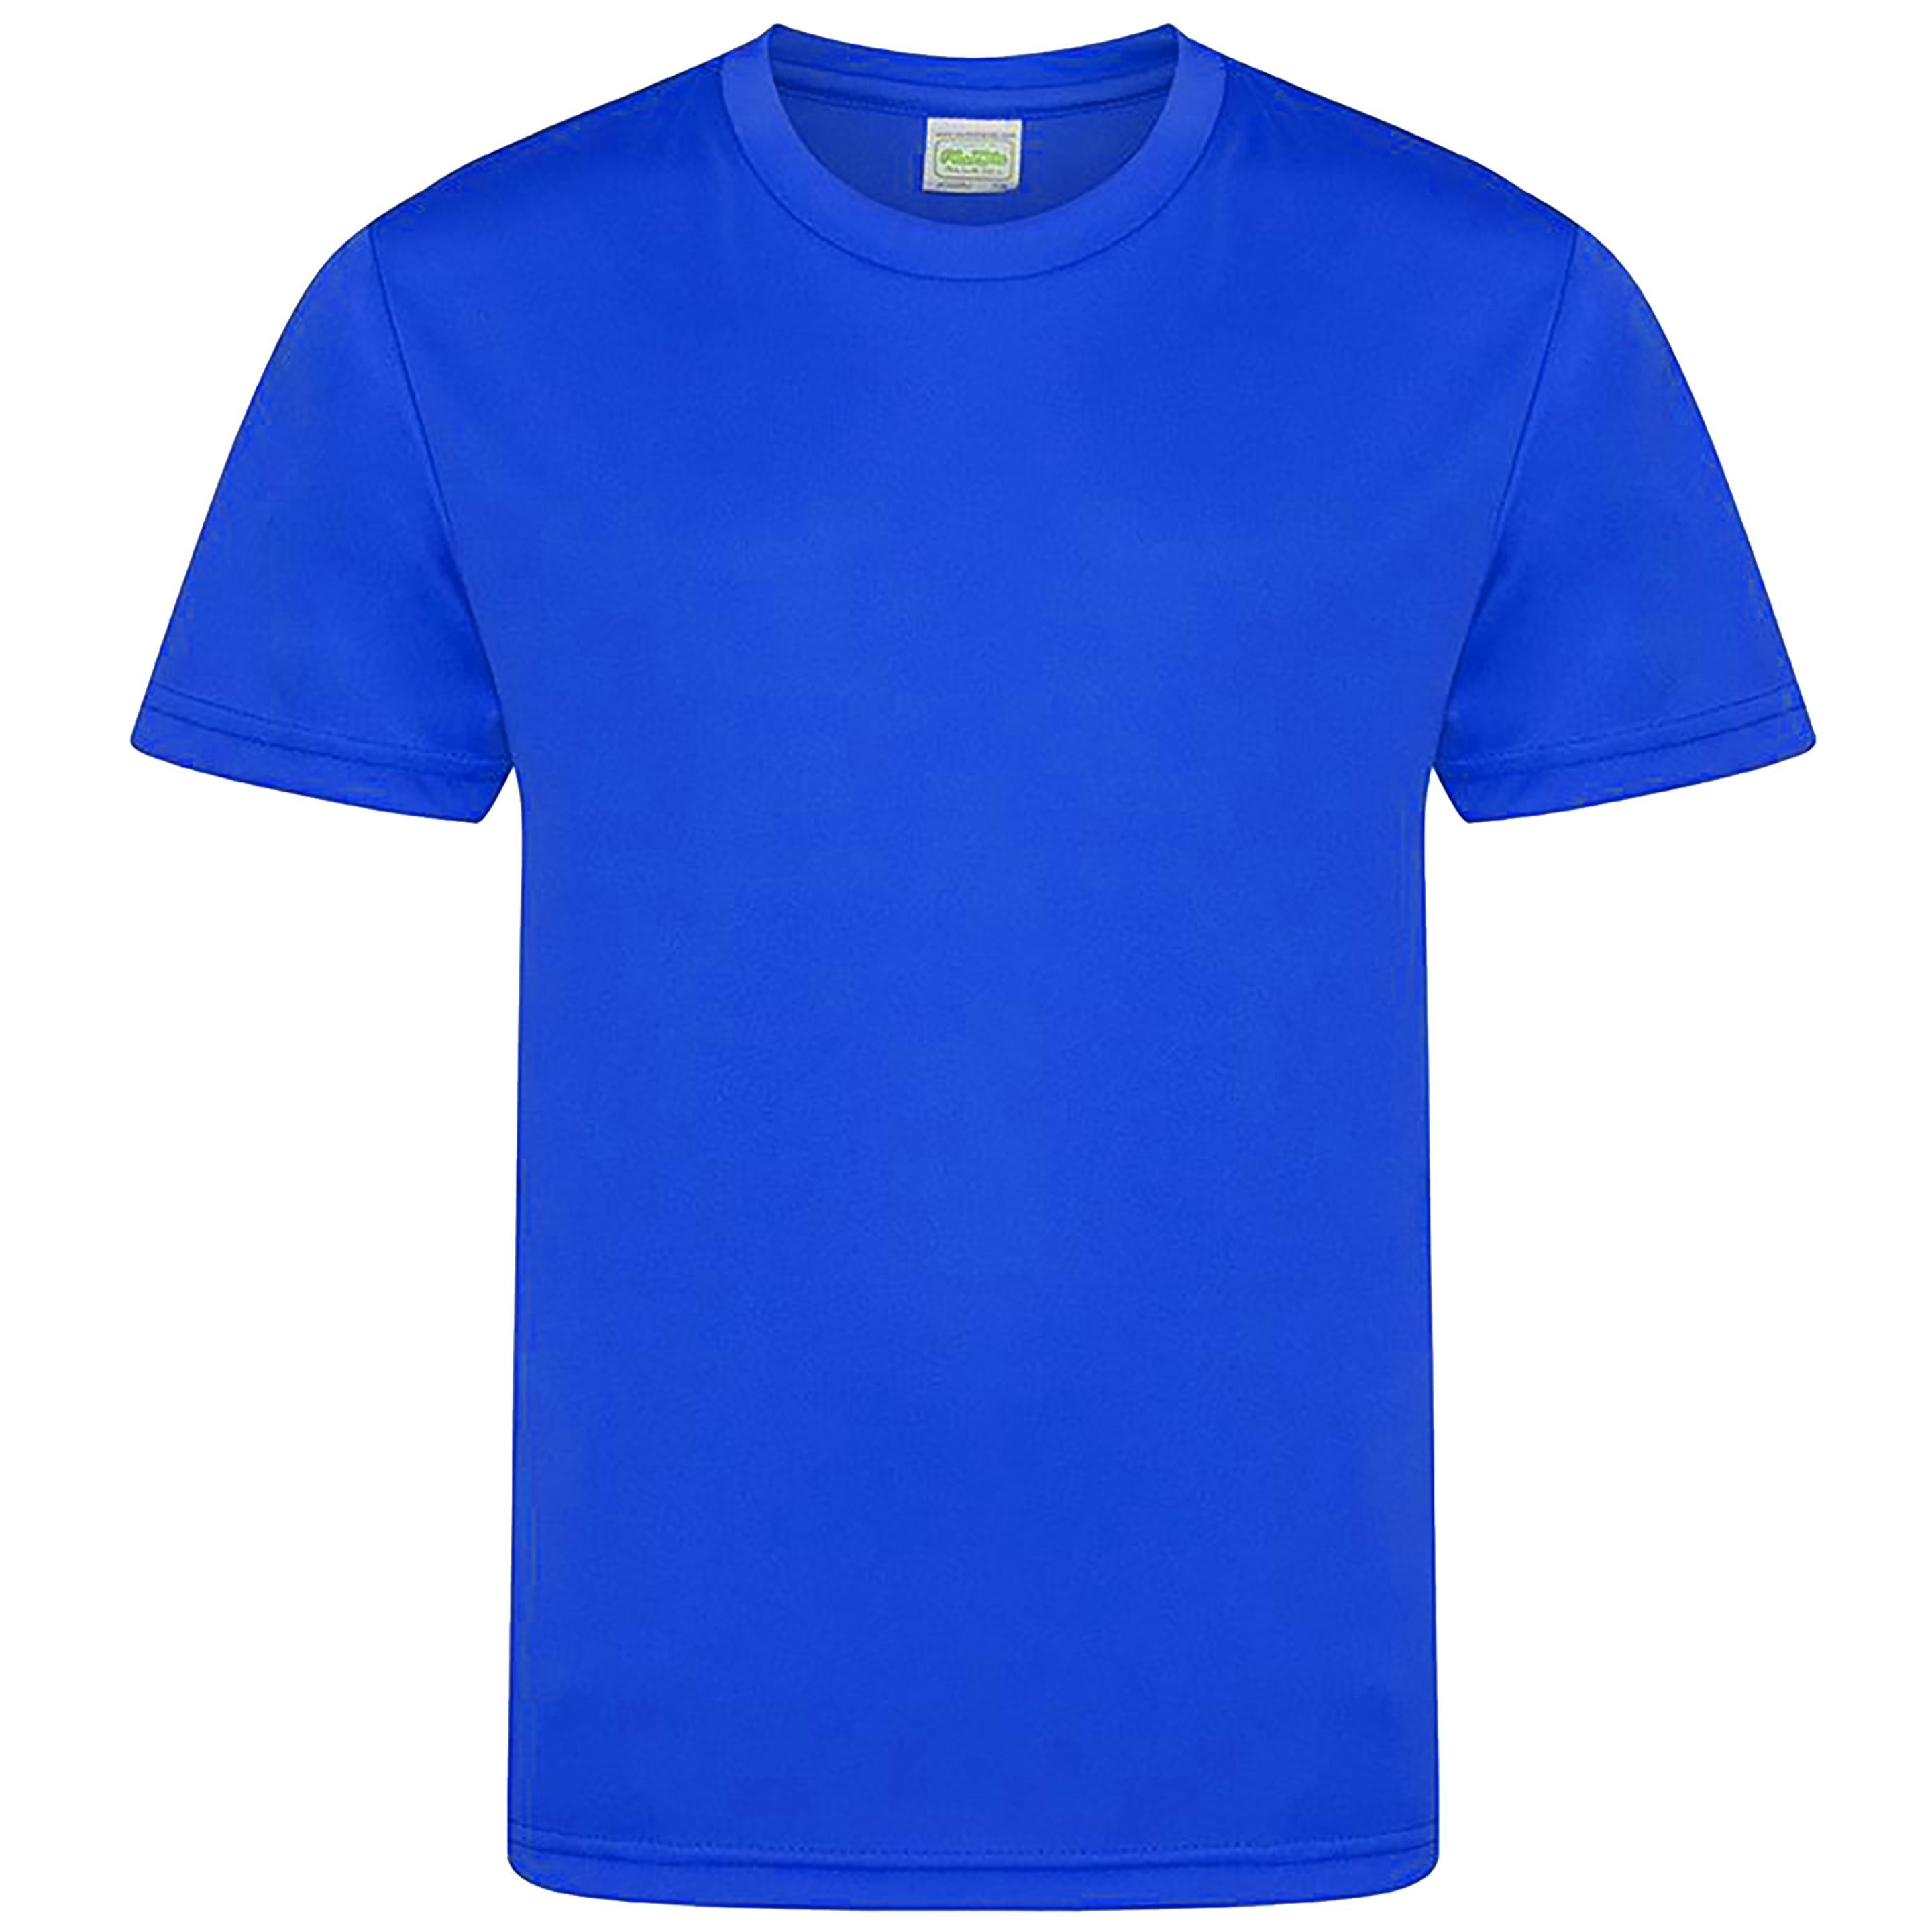 Camiseta Awdis Cool - Azul  MKP